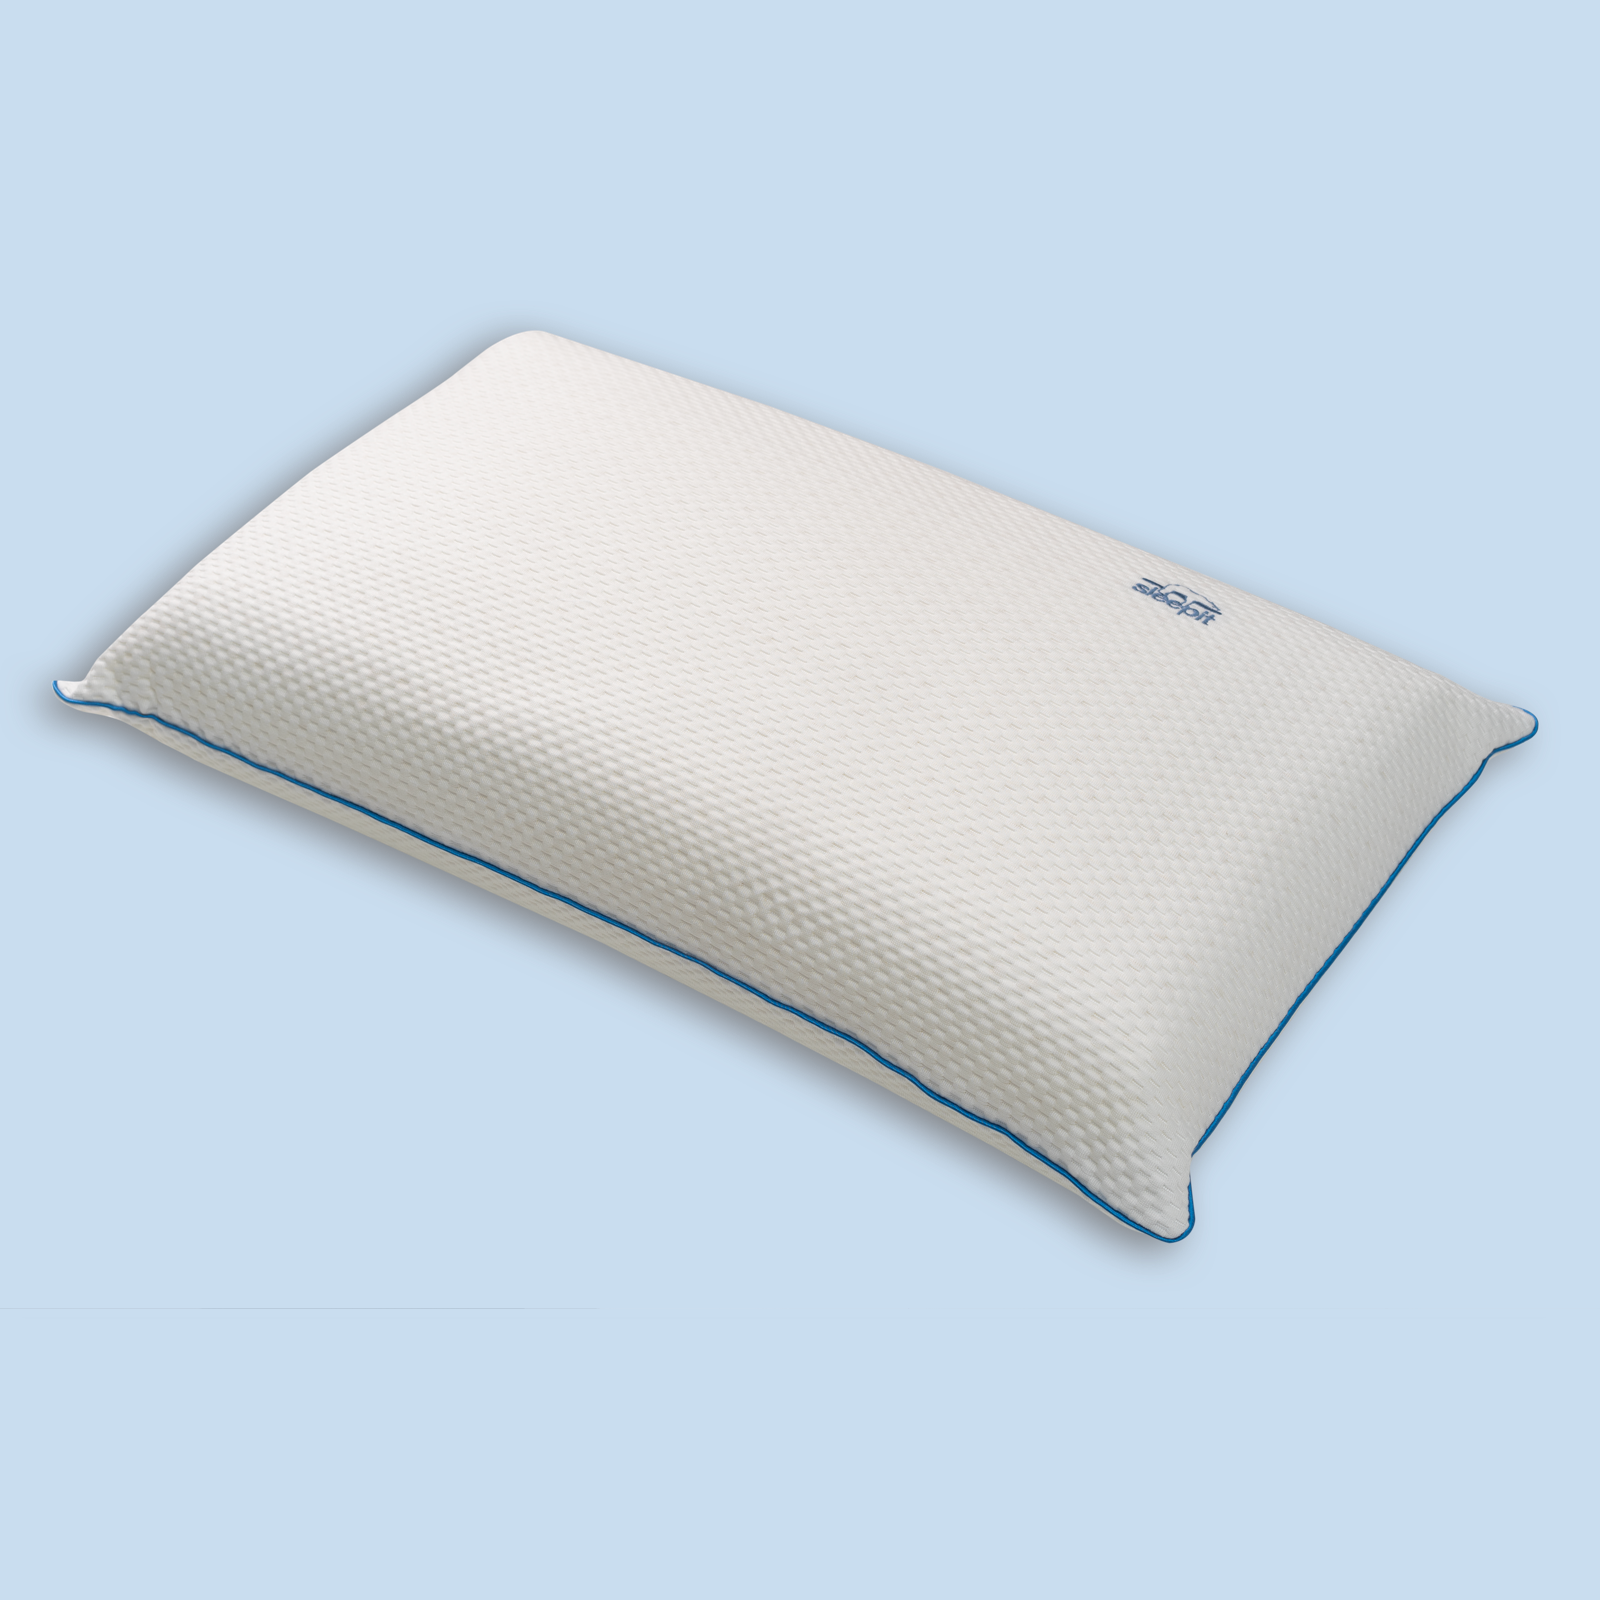 The Ergonomic Pillow